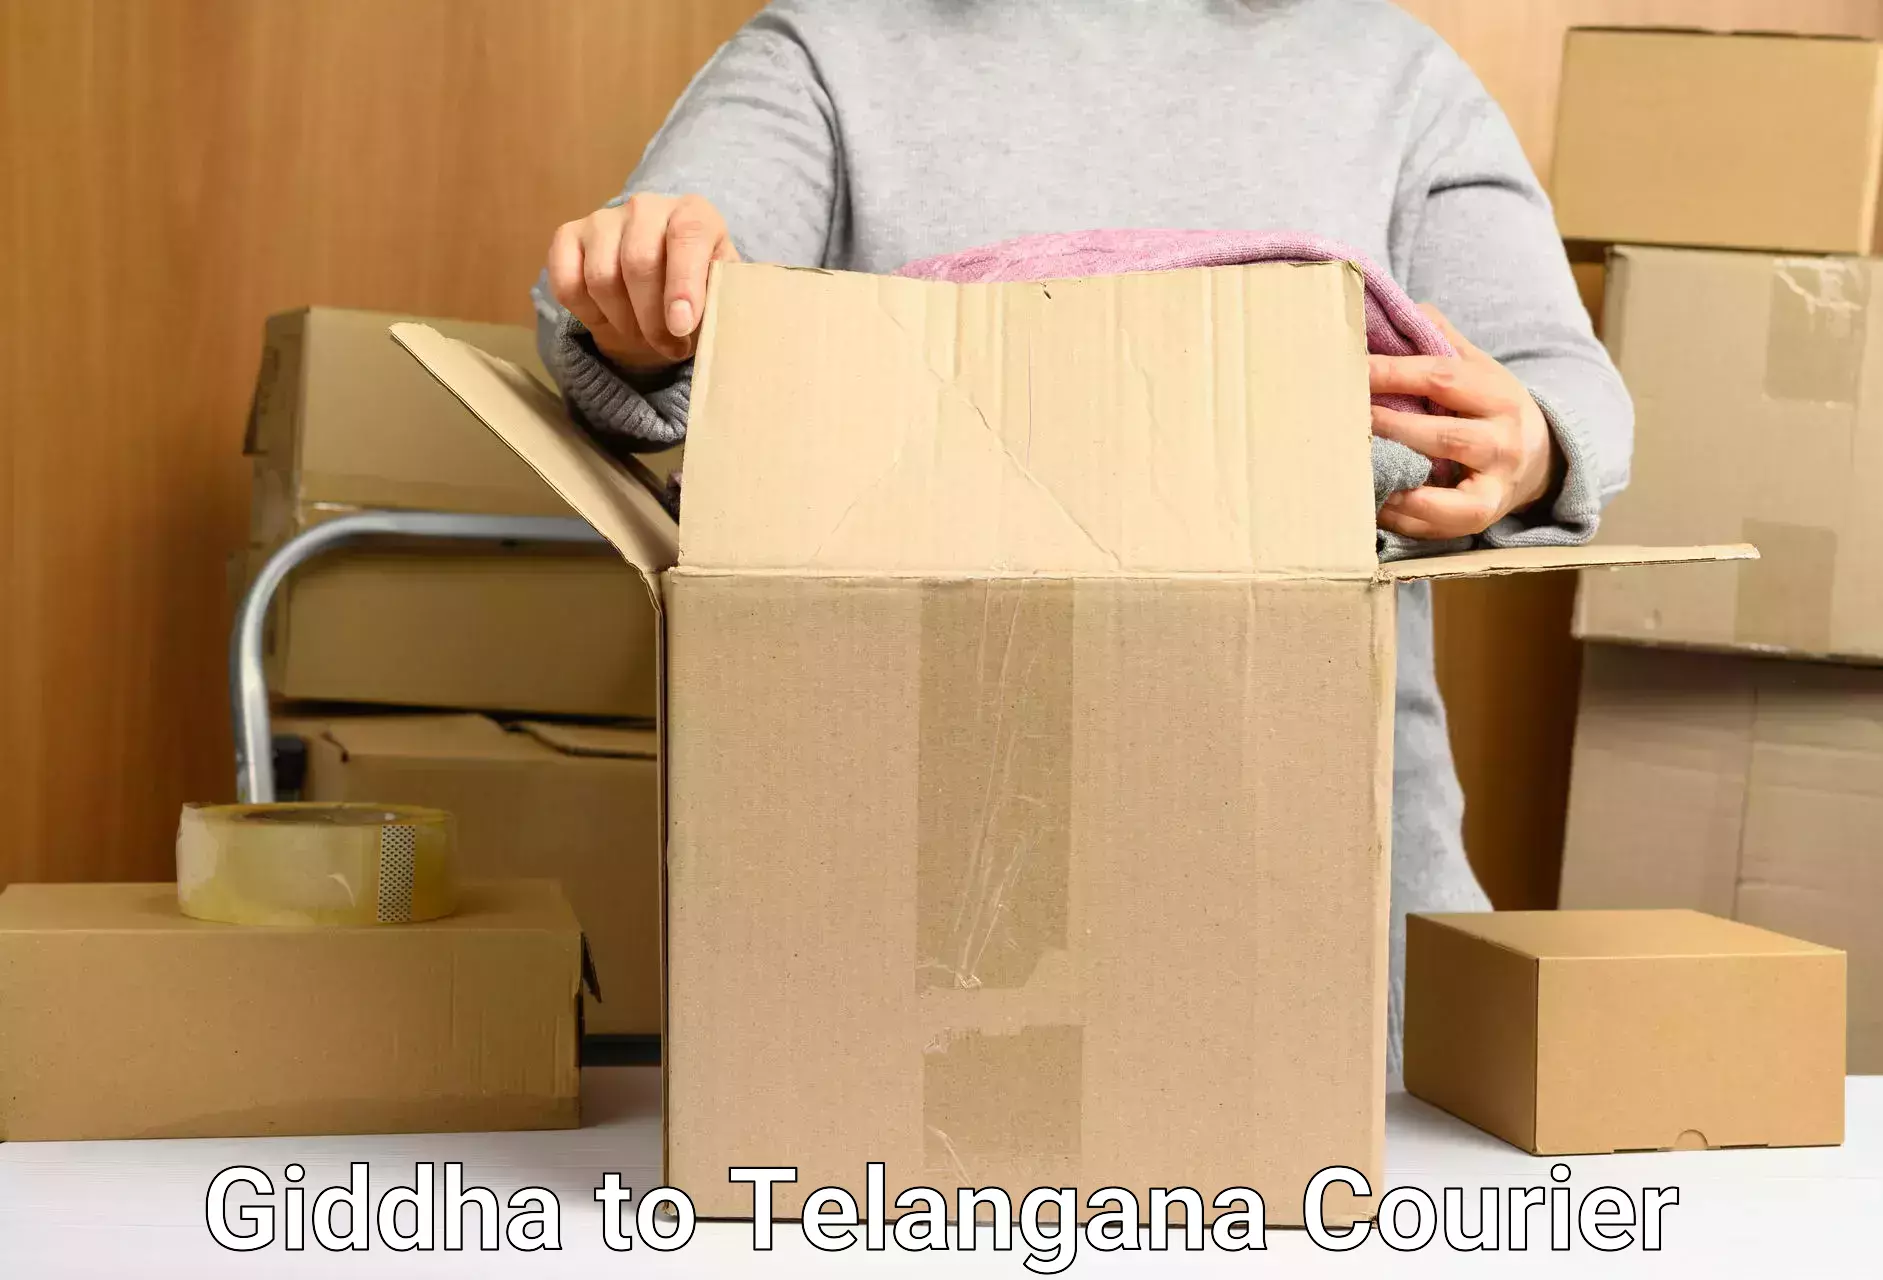 Sustainable courier practices Giddha to Veenavanka